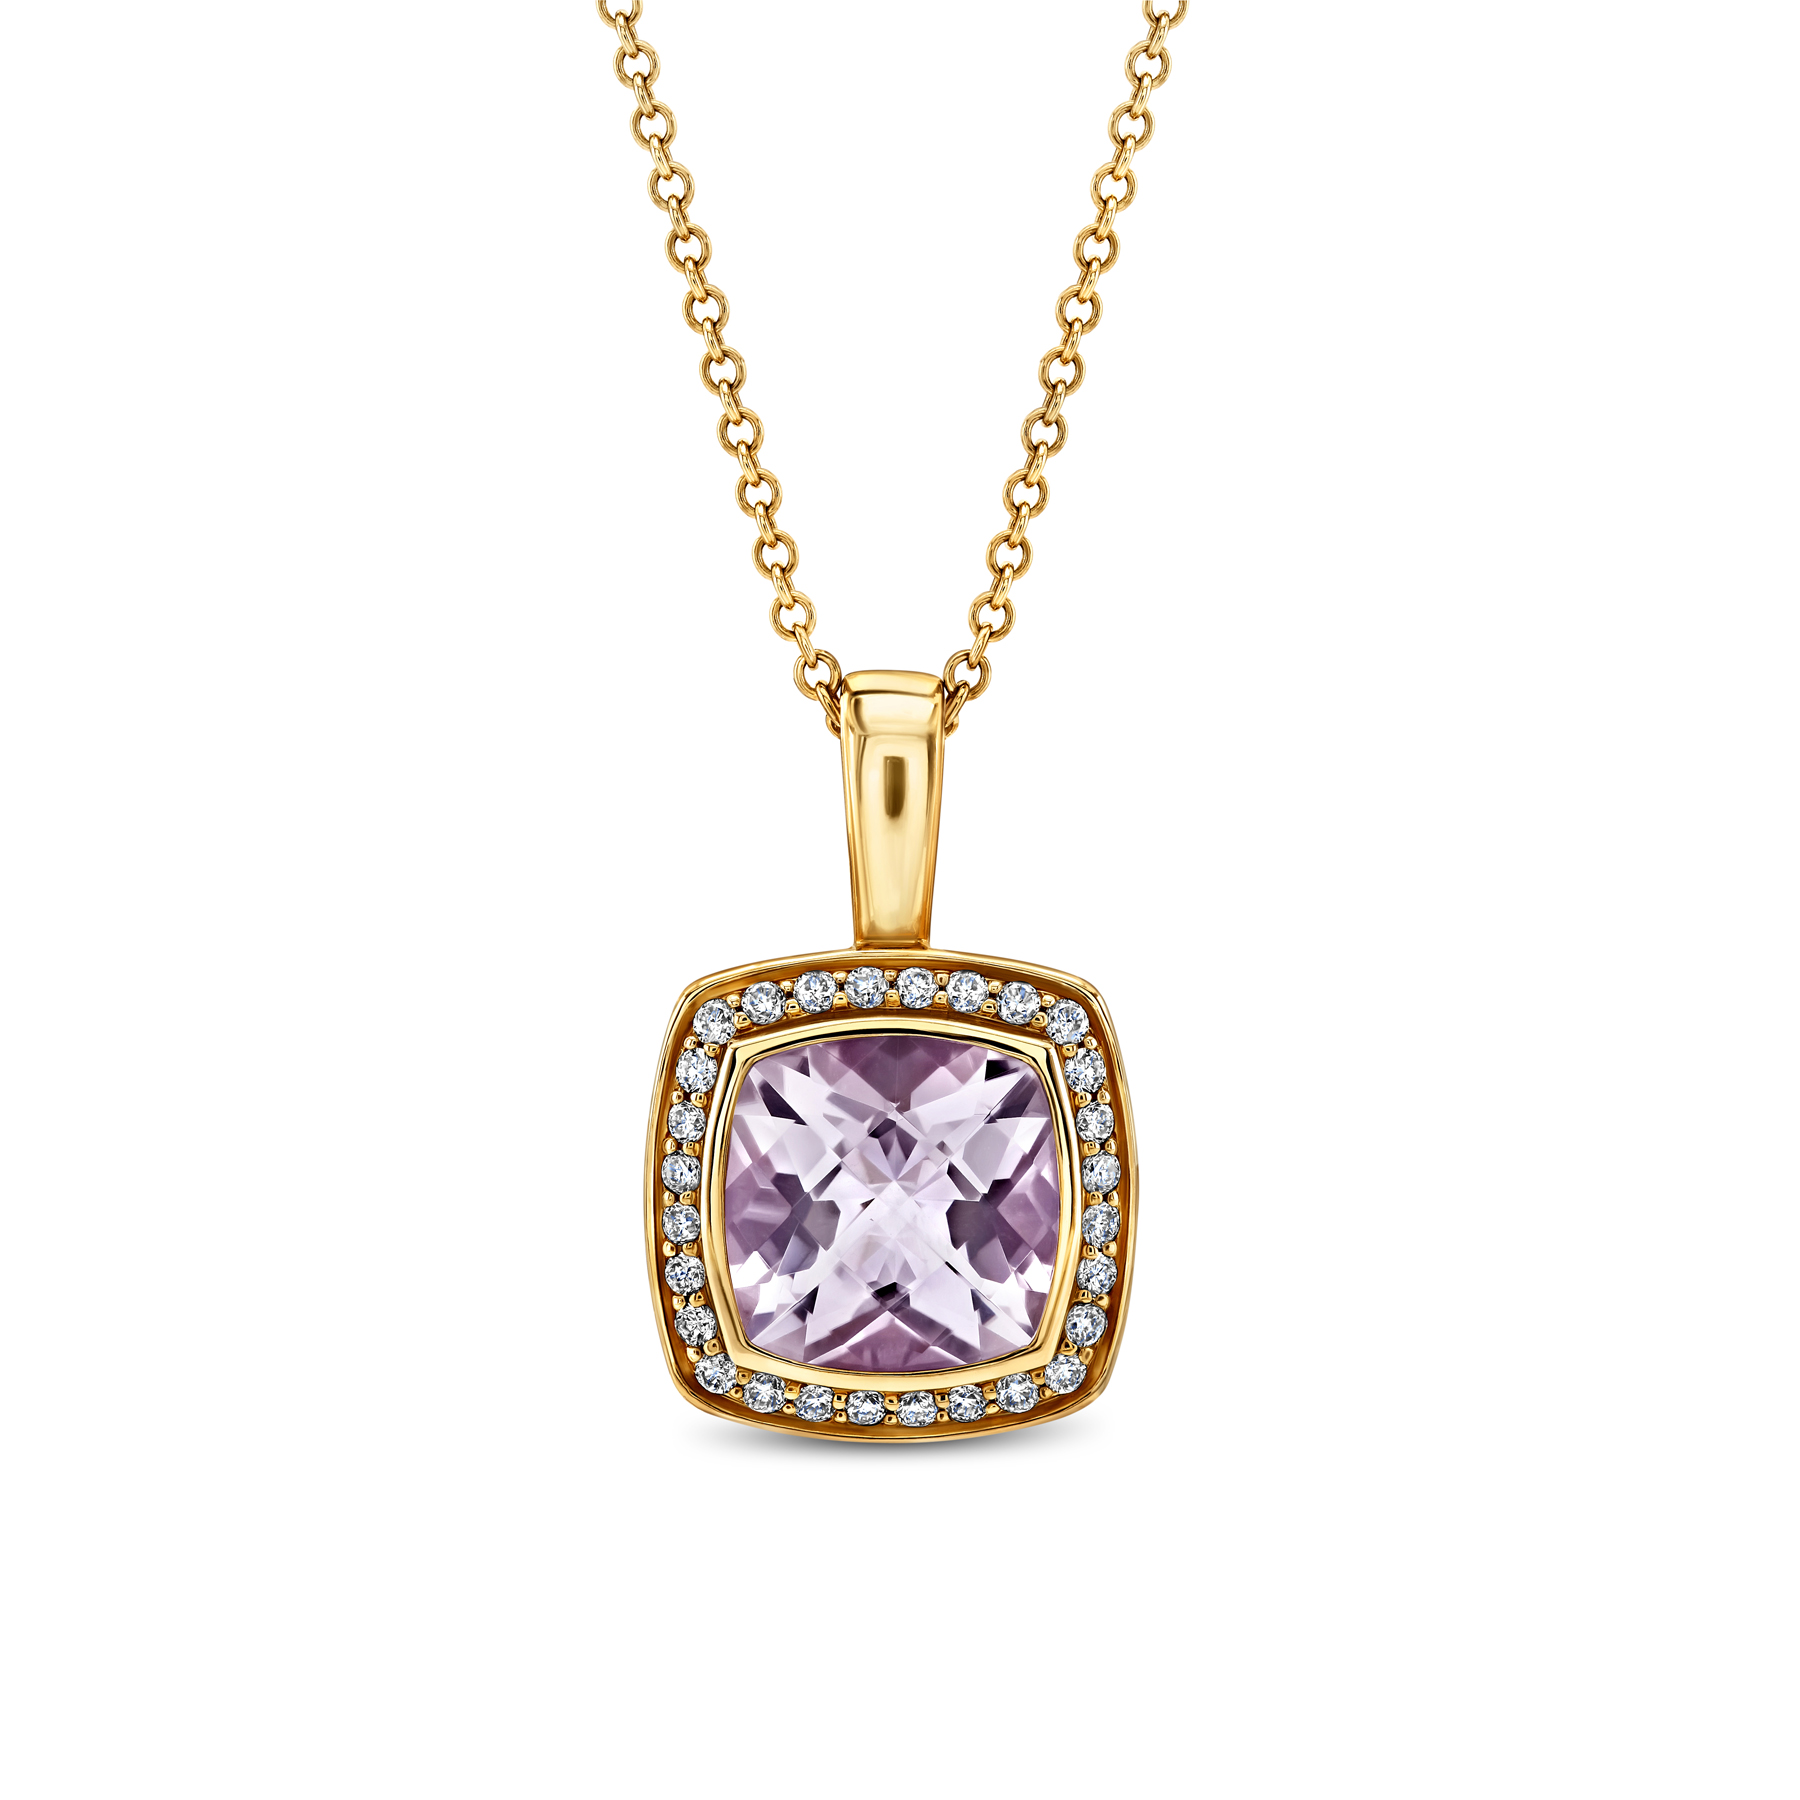 Light amethyst and diamond pendant